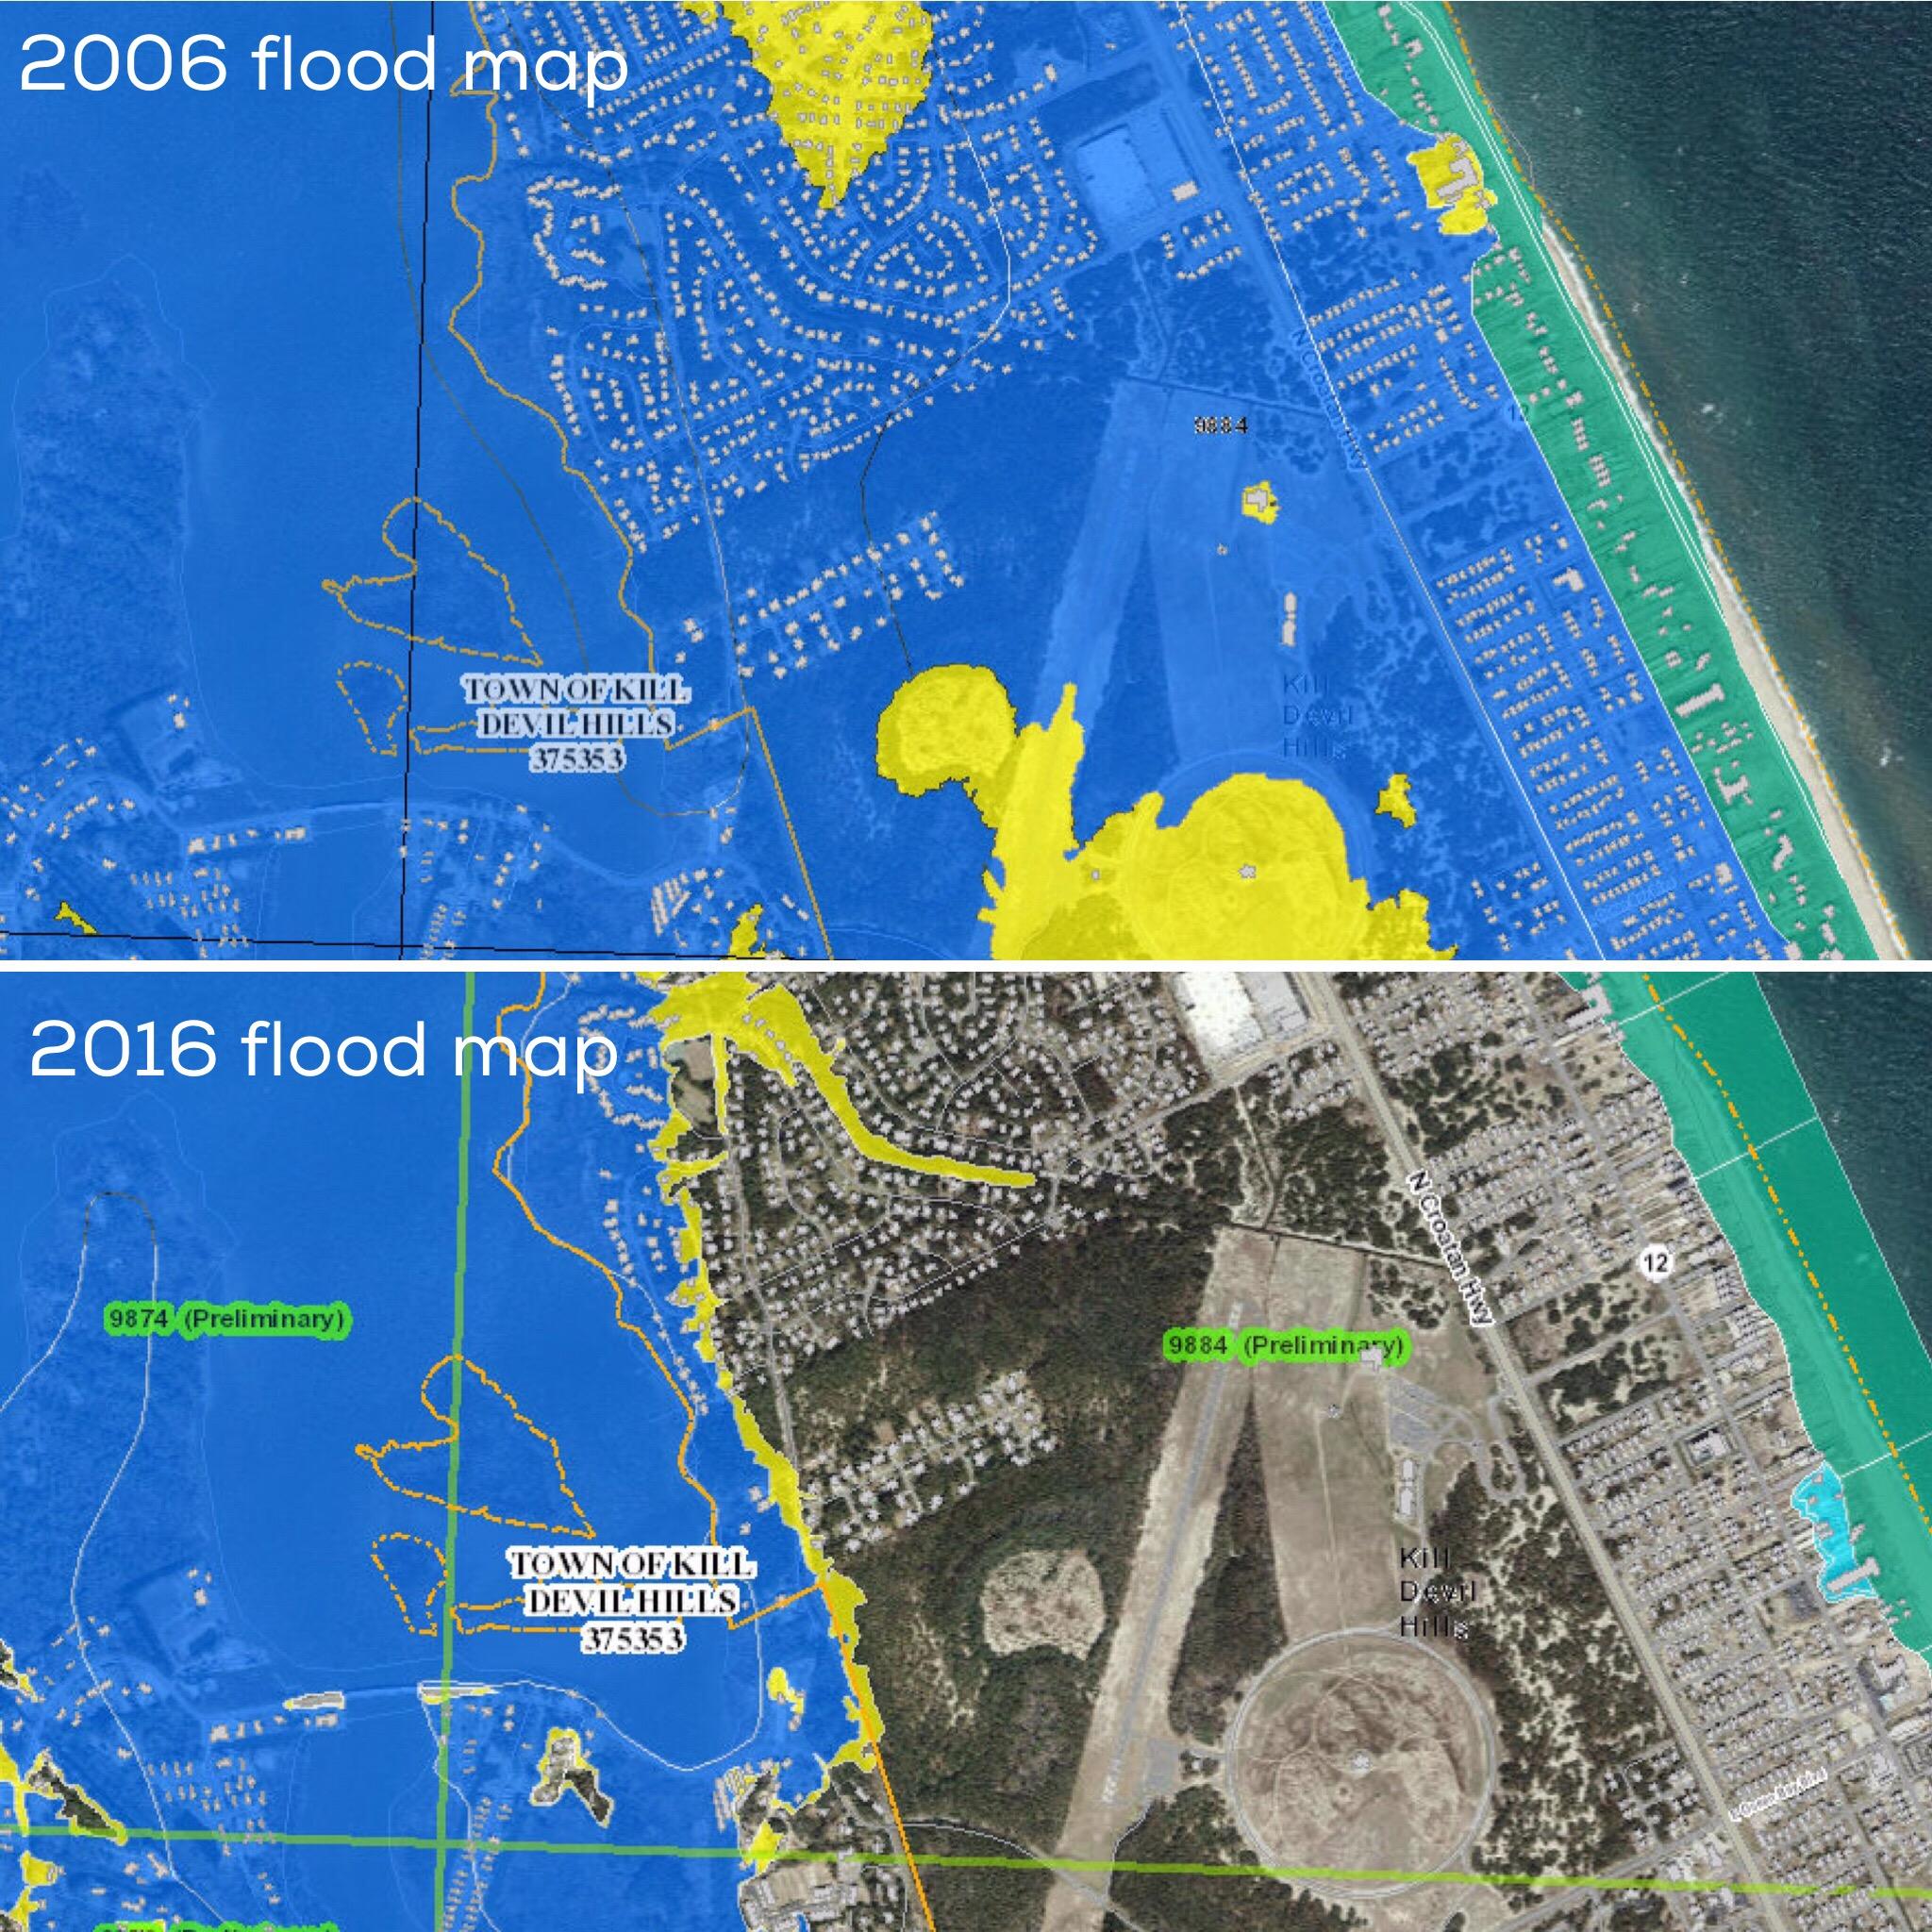 New Flood Maps Downgrade Risk For 31,000 Coastal Properties WUNC